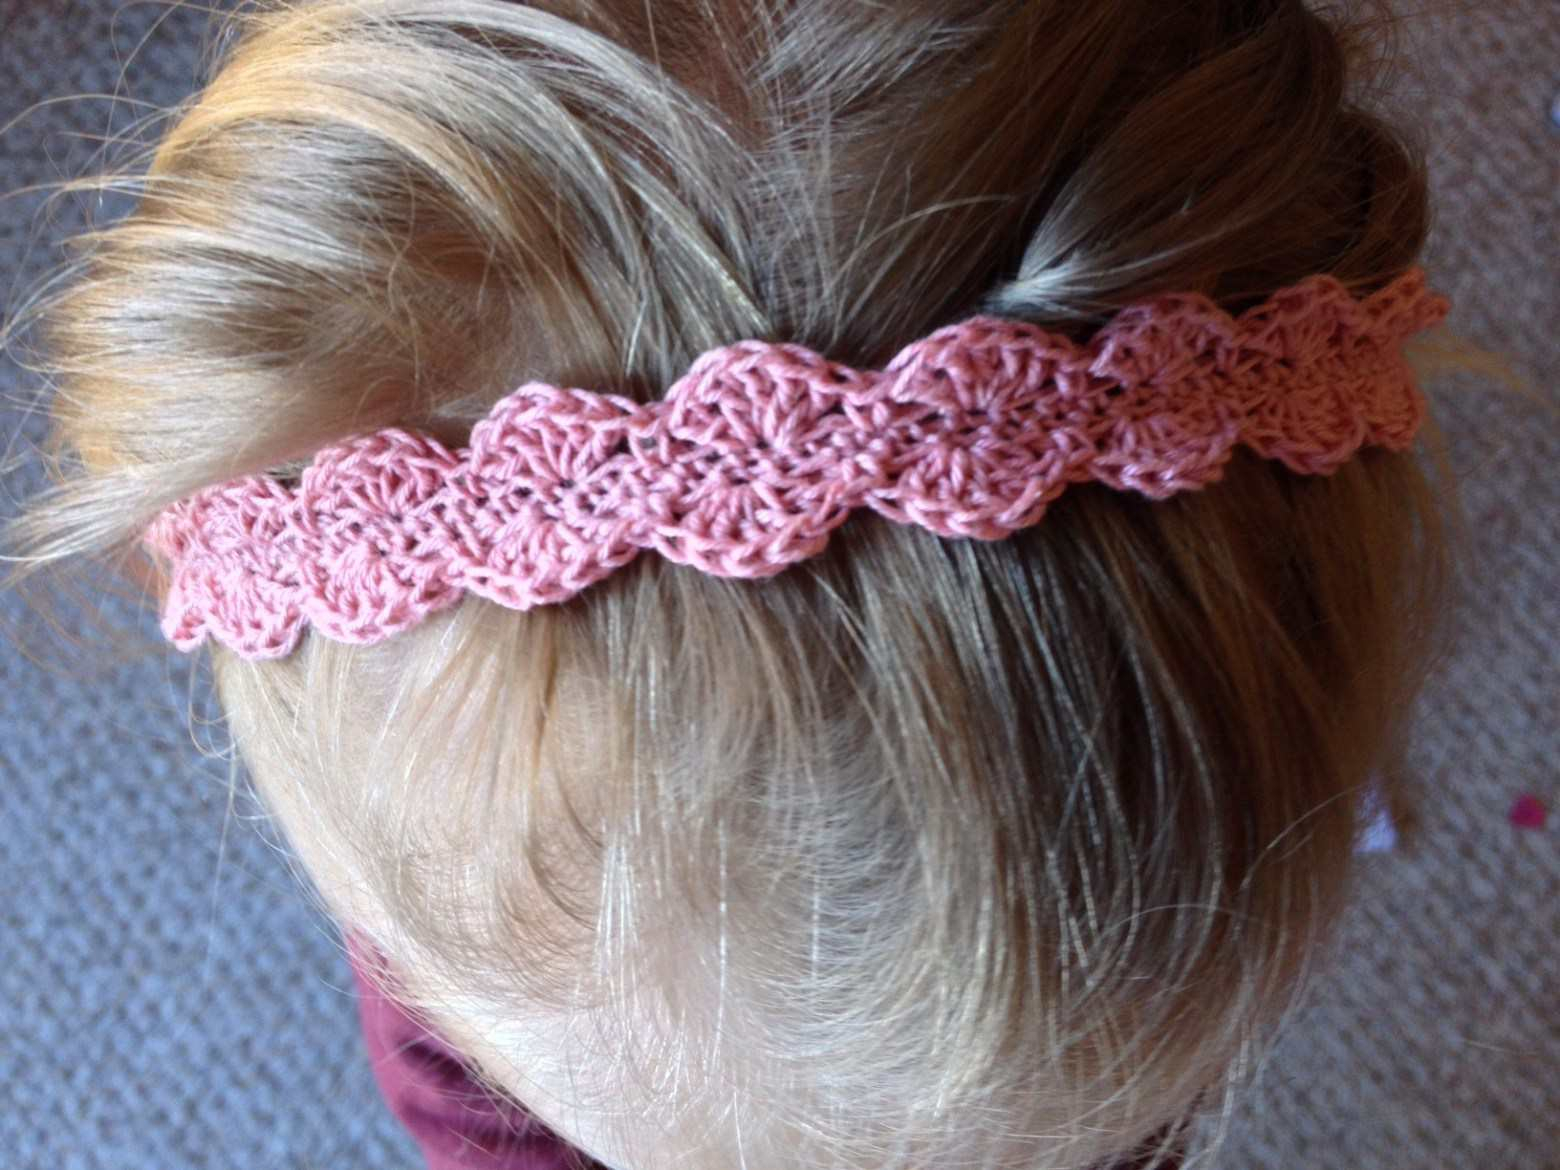 Crochet Headband With Flower Pattern 12 Free Patterns For Crochet Headbands